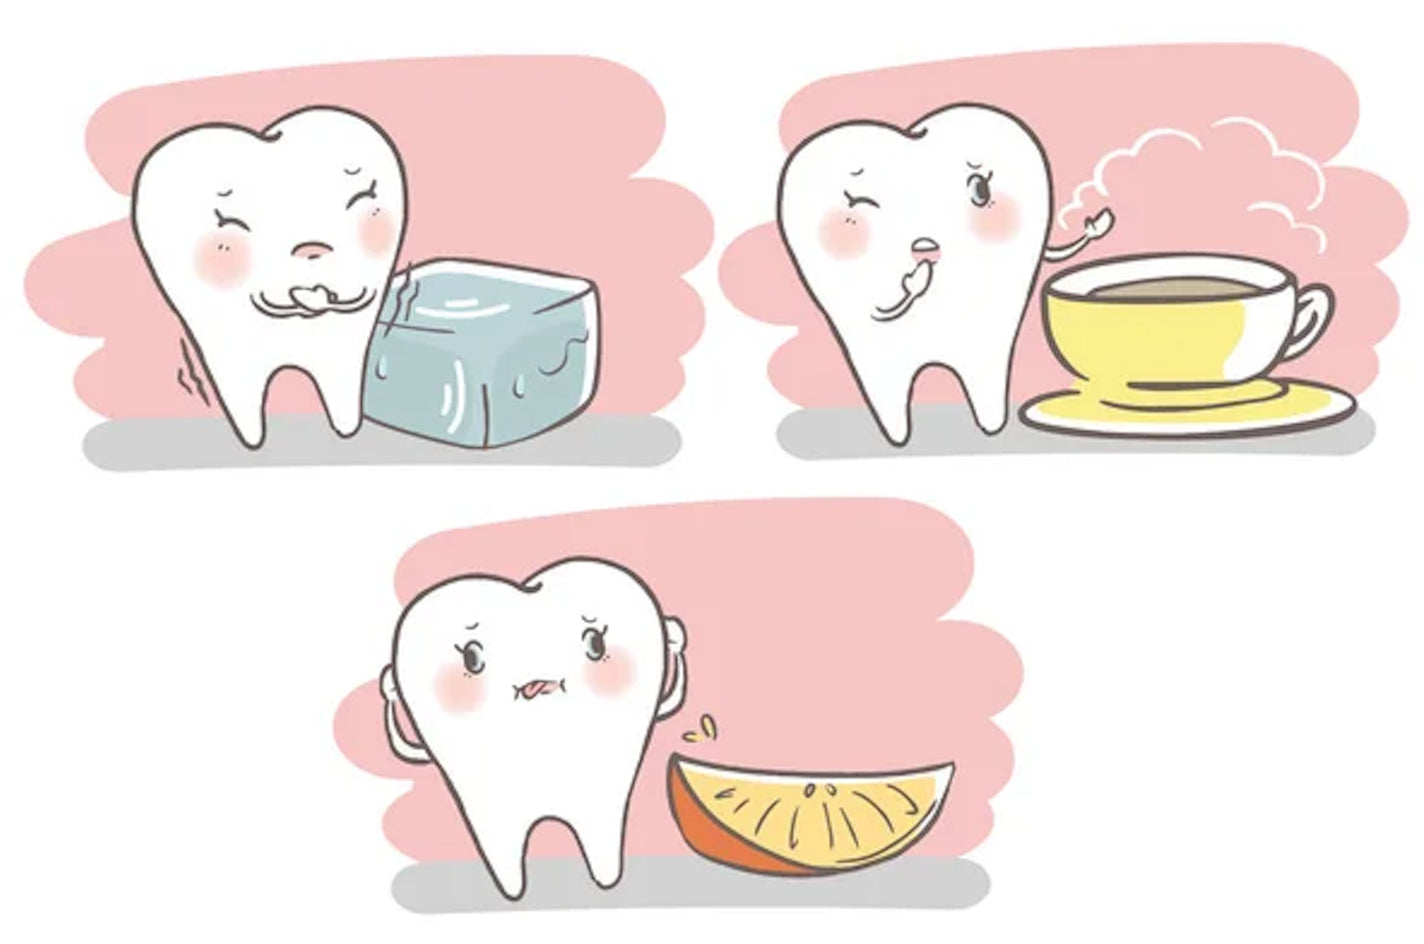 sensitive teeth